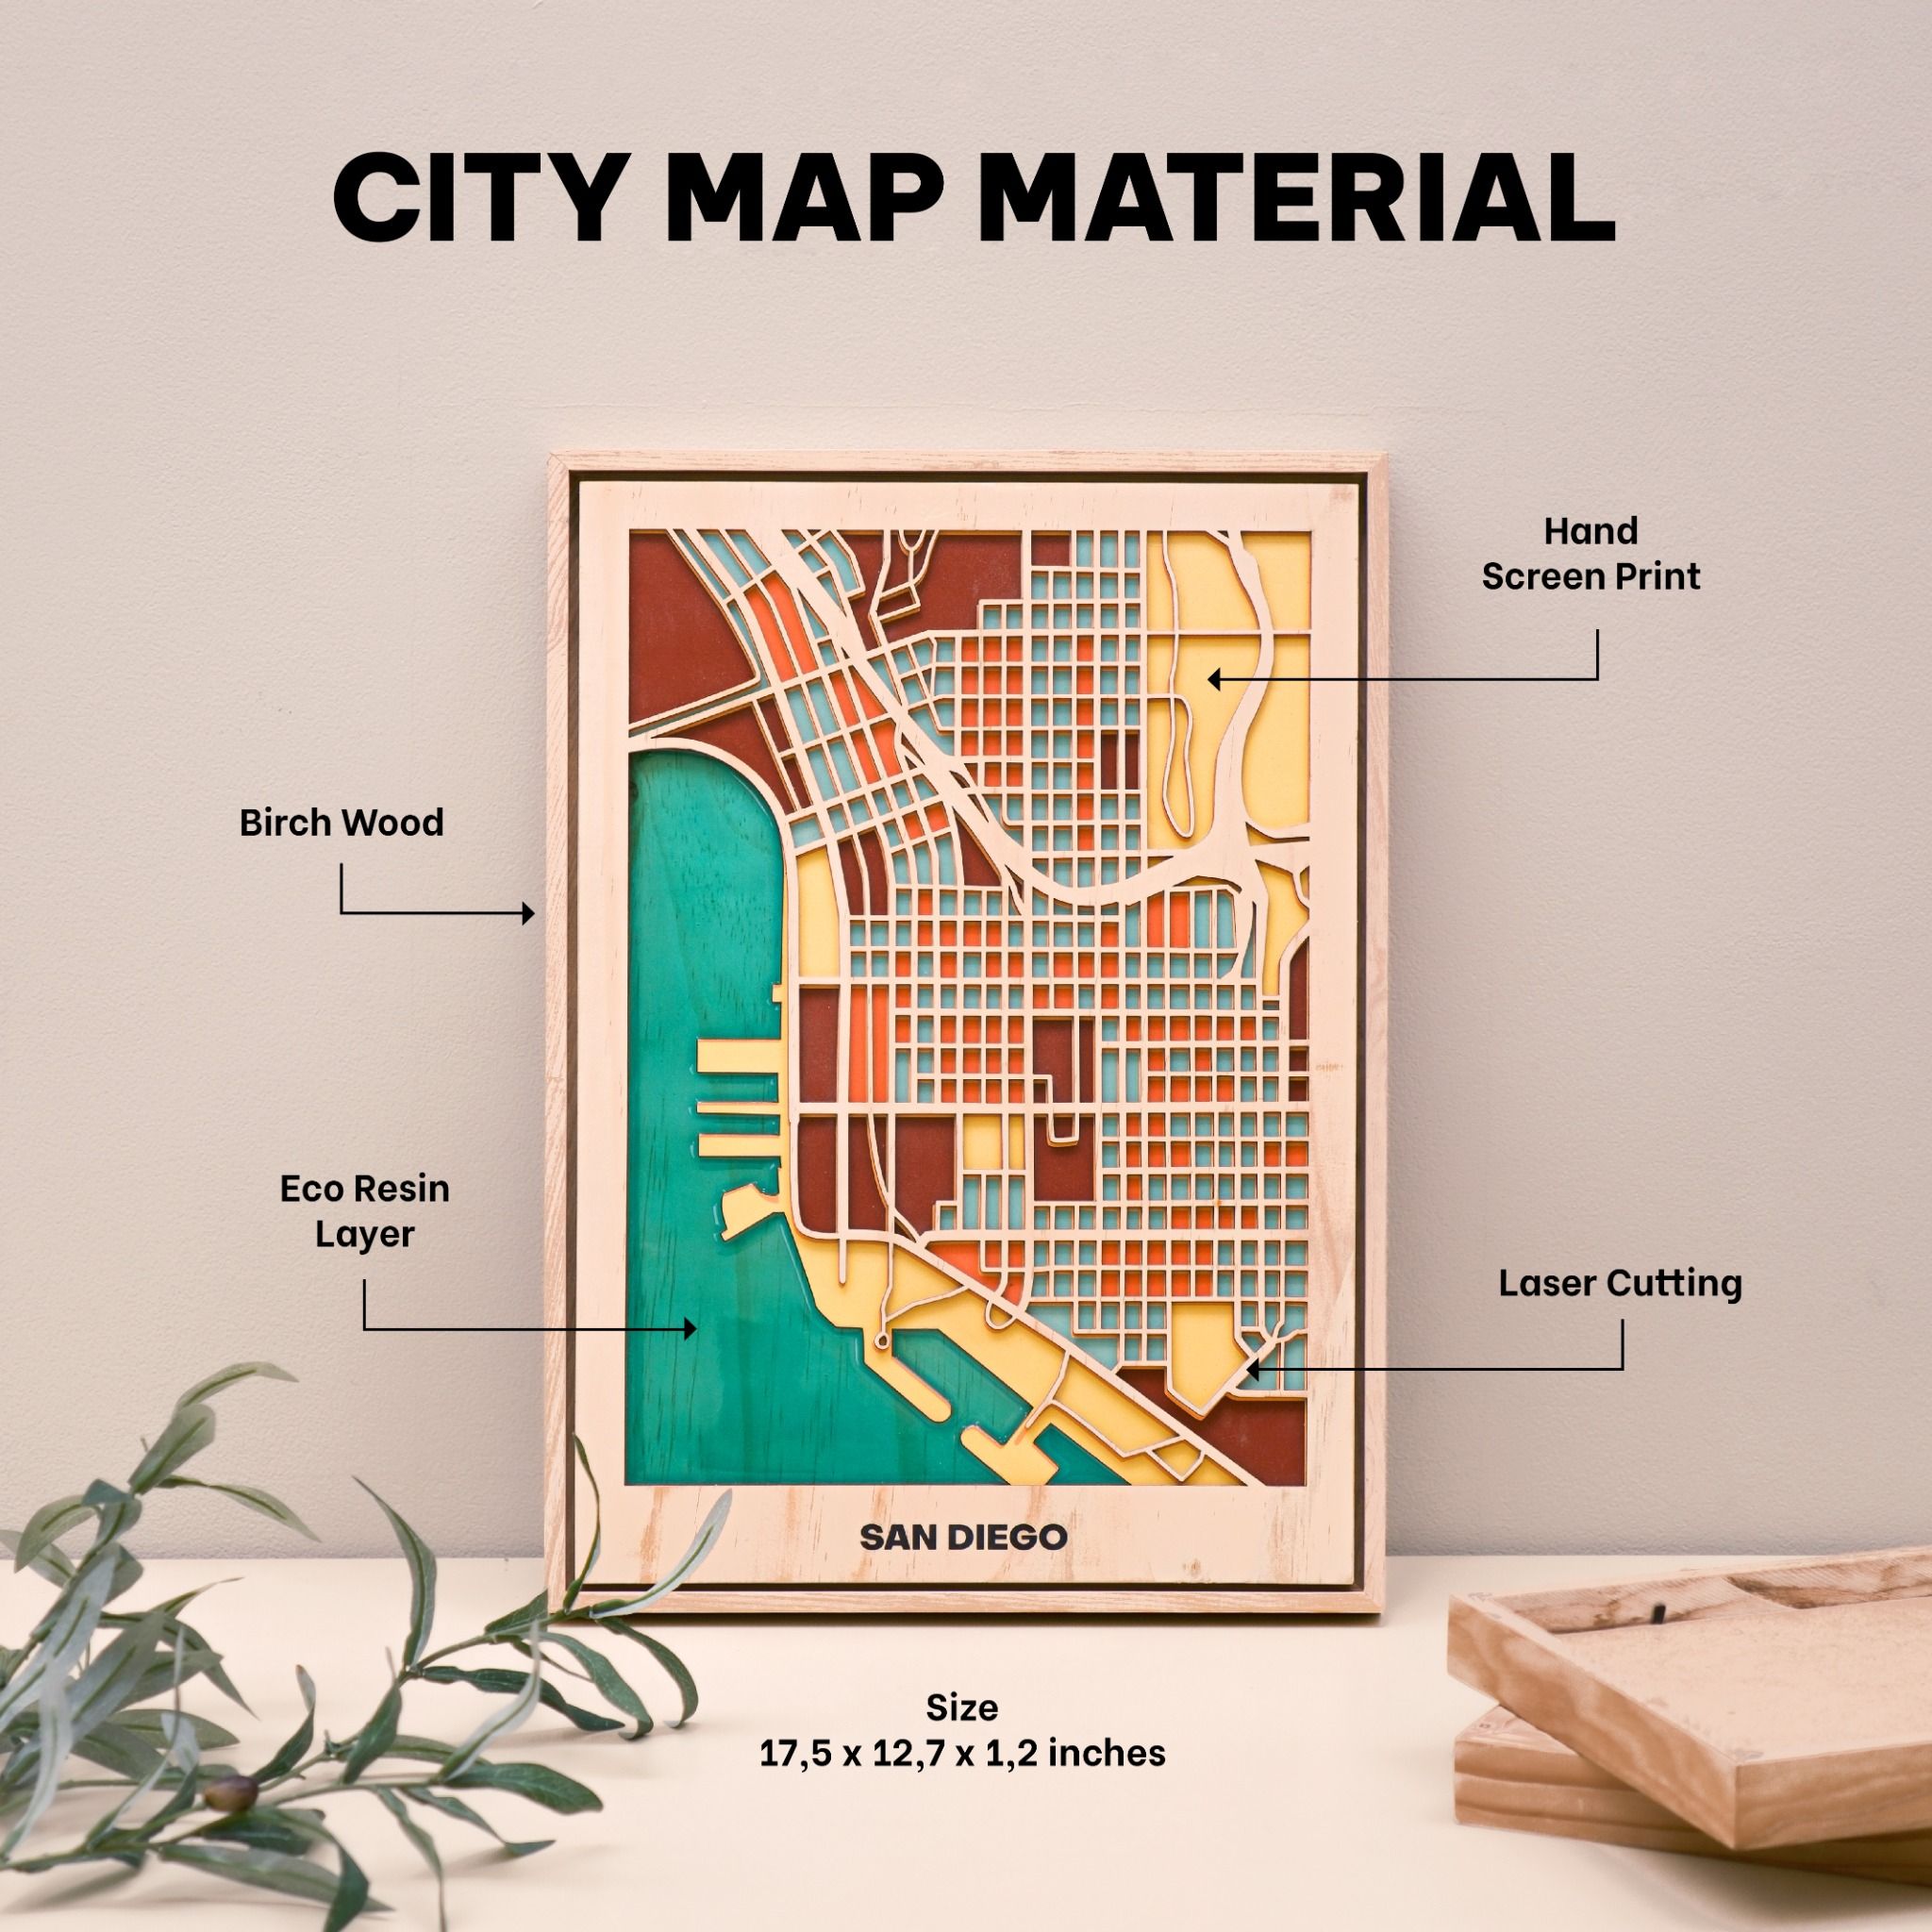  Wooden City Map - Sapa 